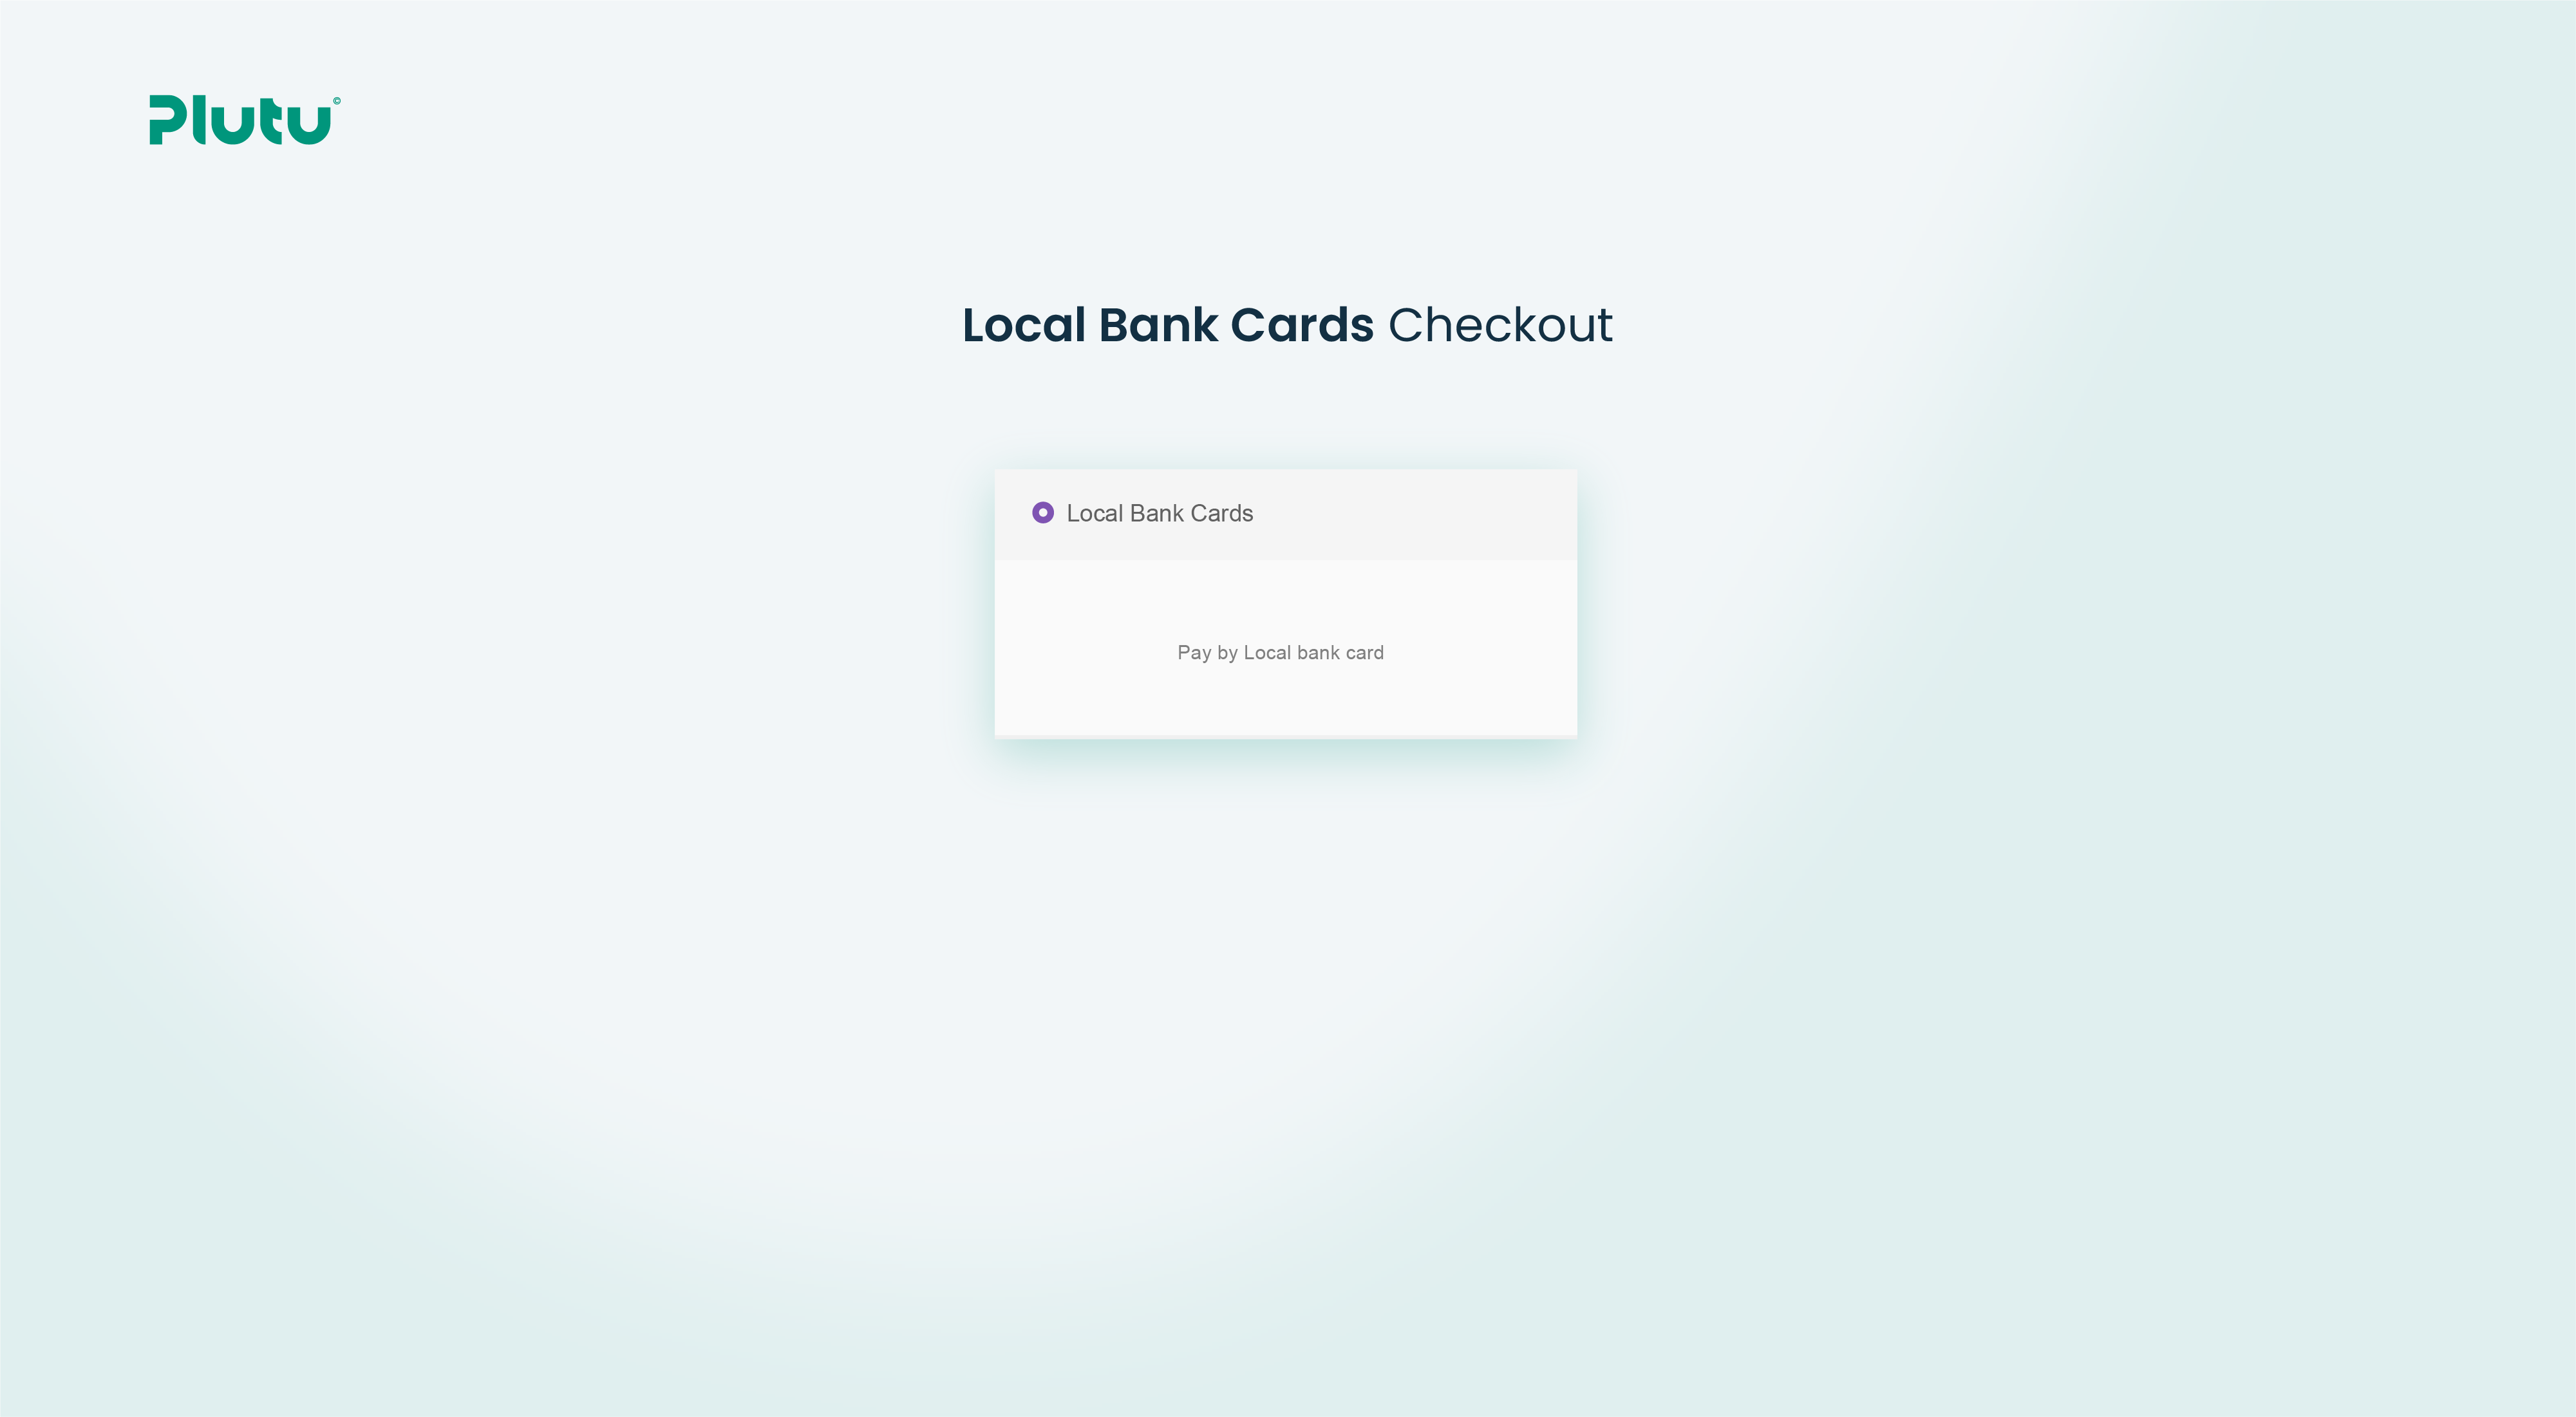 Checkout via Local Bank Cards